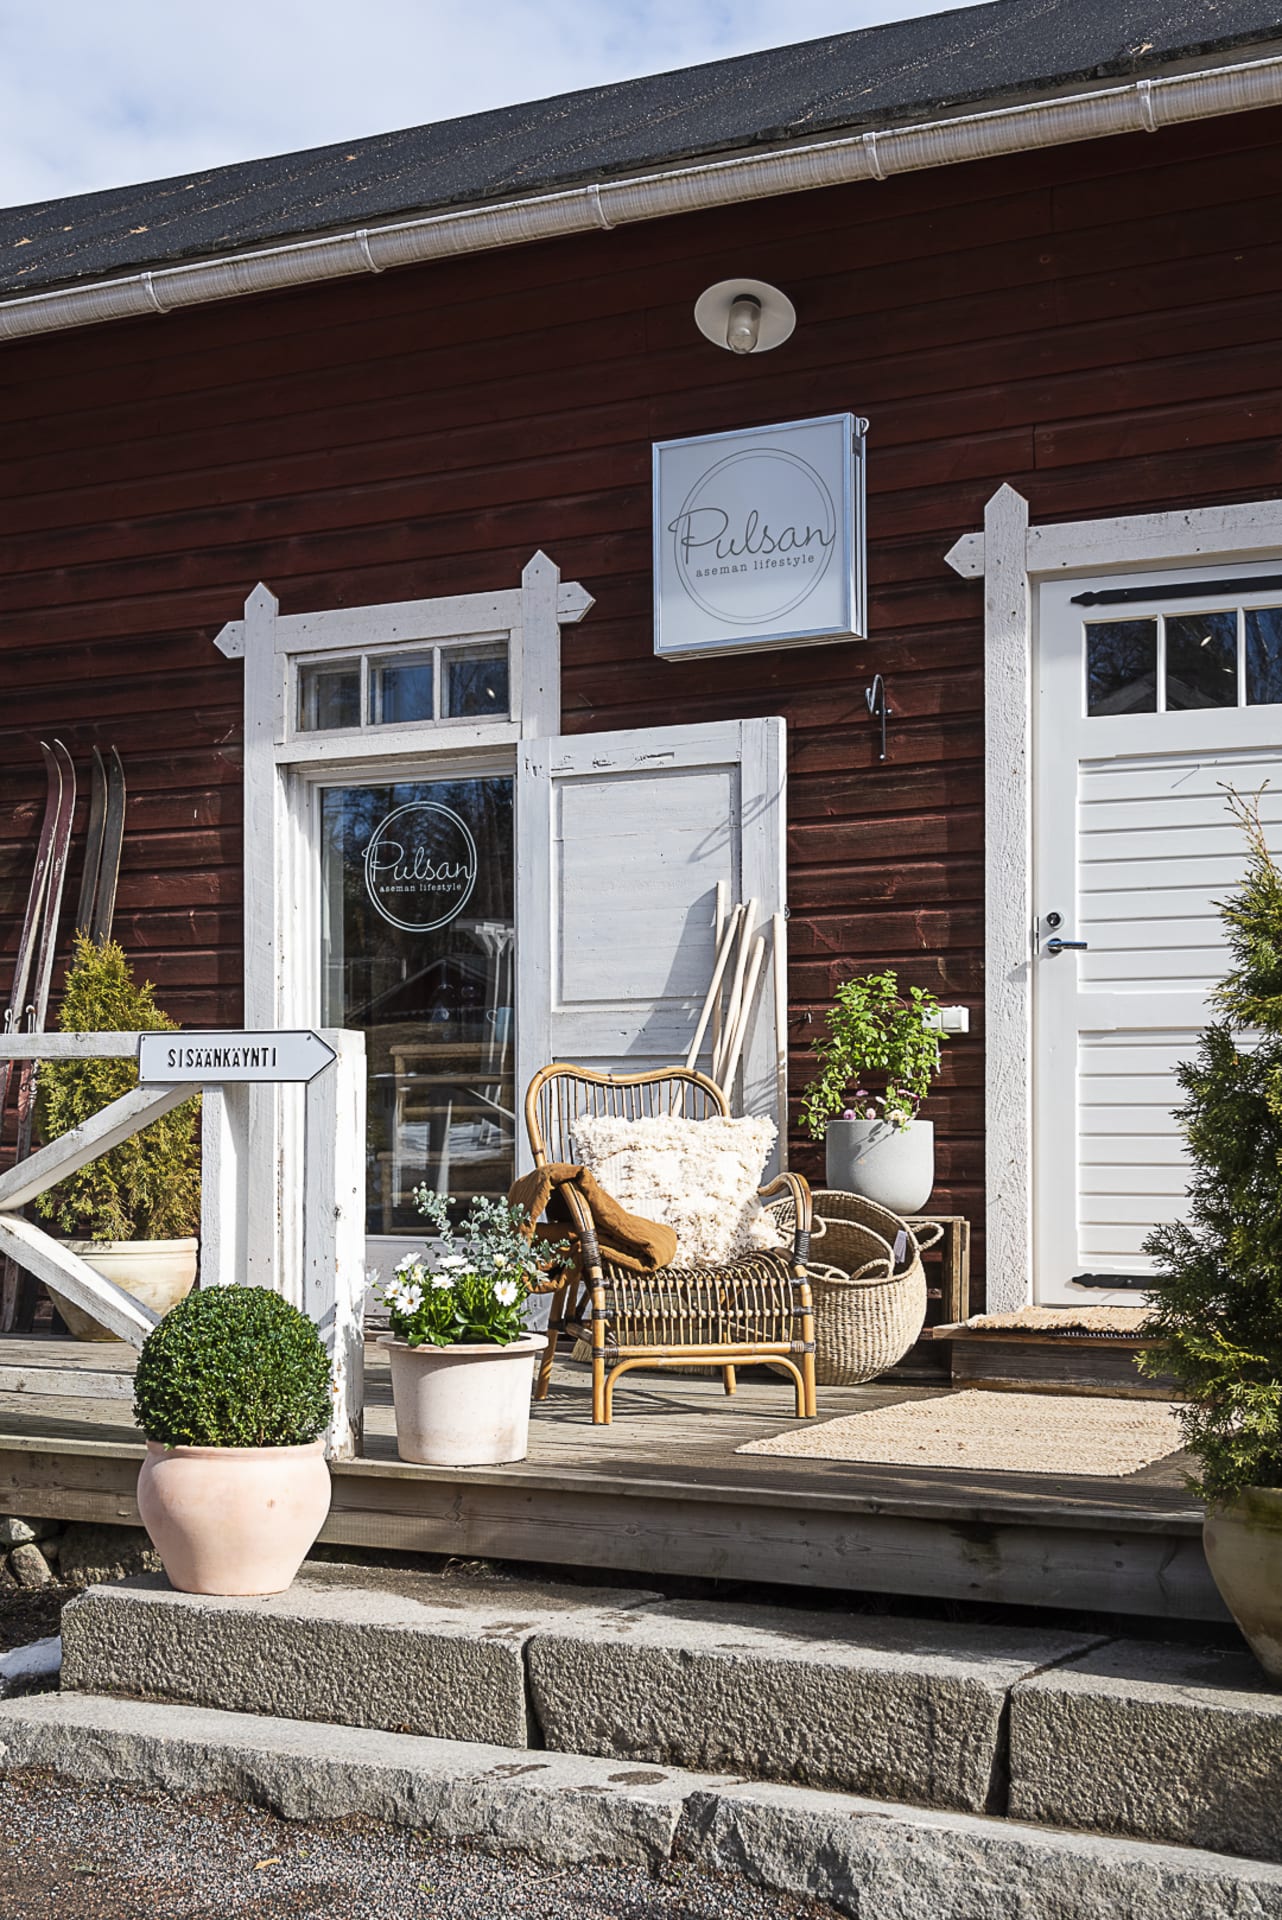 Pulsan Asema Lifestyle Boutique - LakeSaimaa Purest Finland